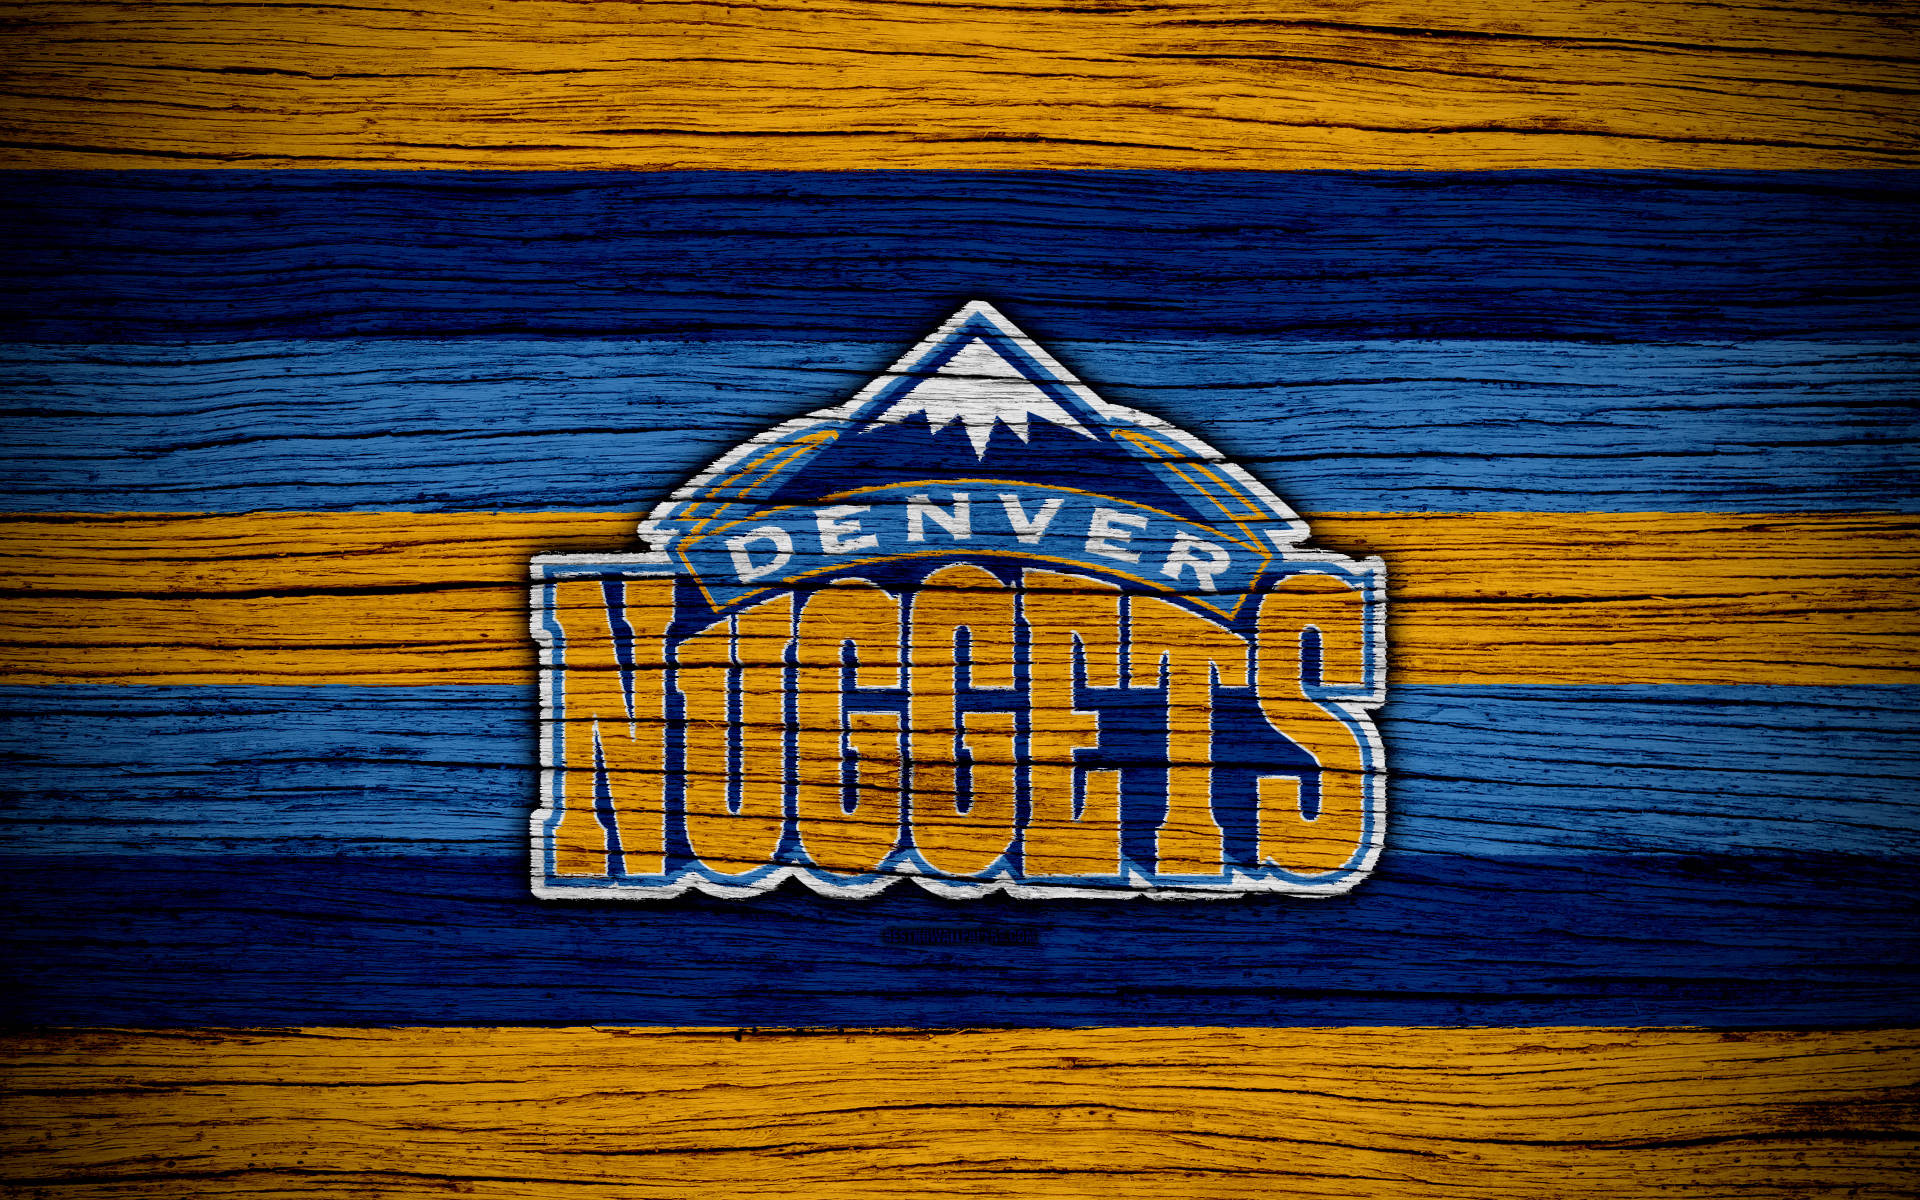 Denver Nuggets - Anyone need a new wallpaper?